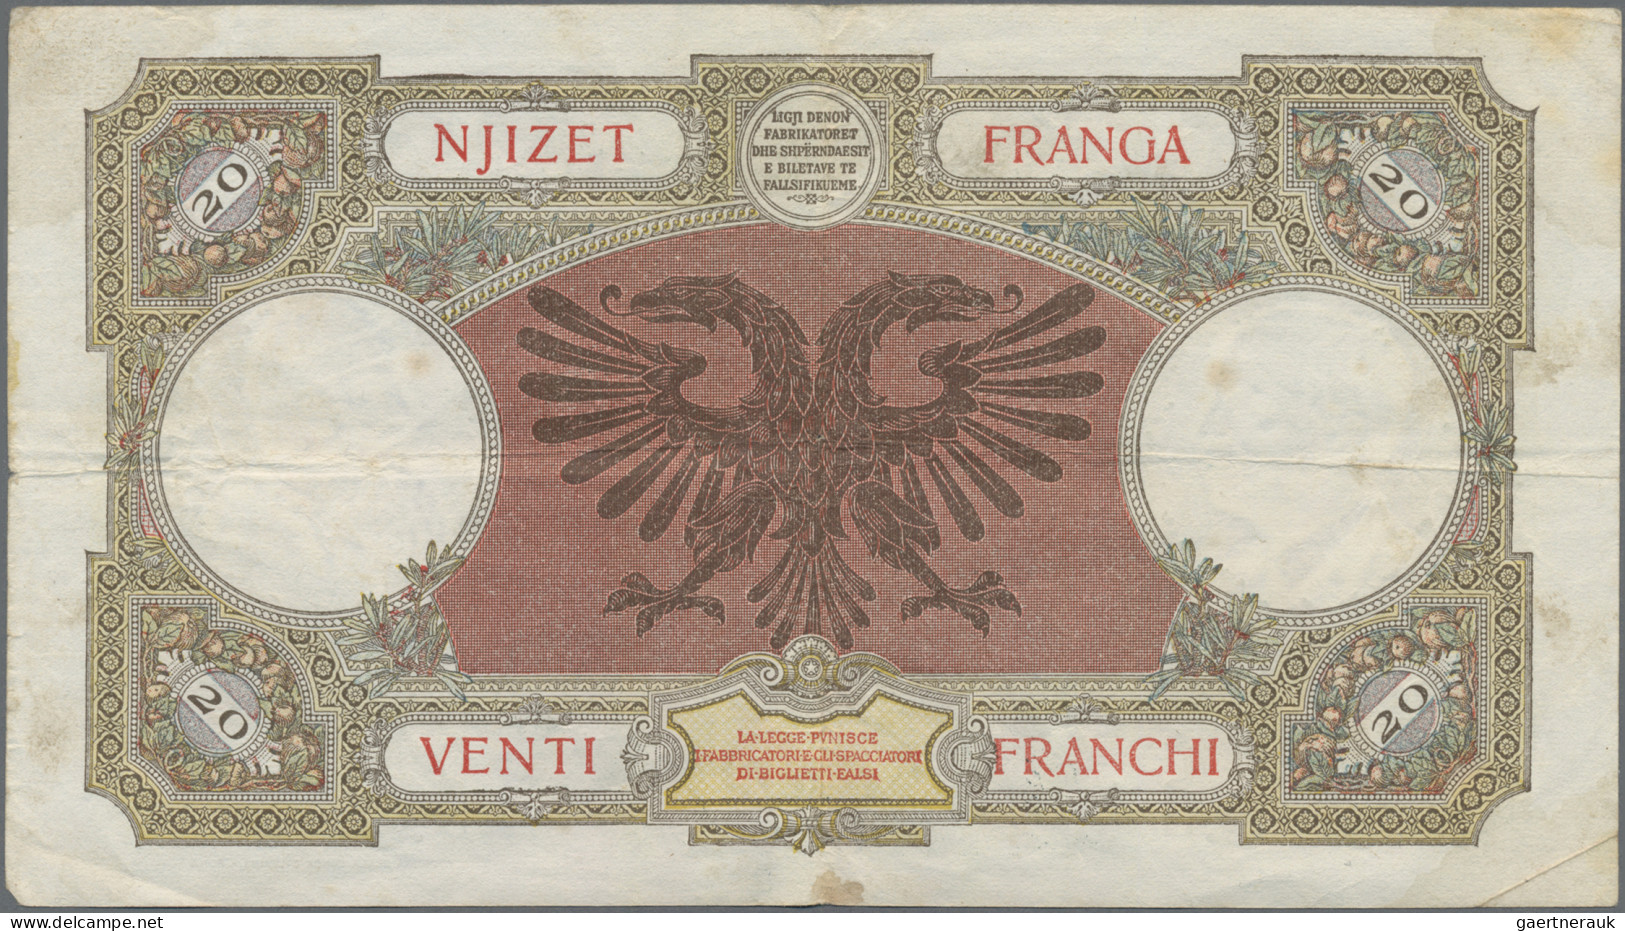 Albania: Banca Nazionale d'Albania and Banka e Shtetit Shqiptar, lot with 5 bank